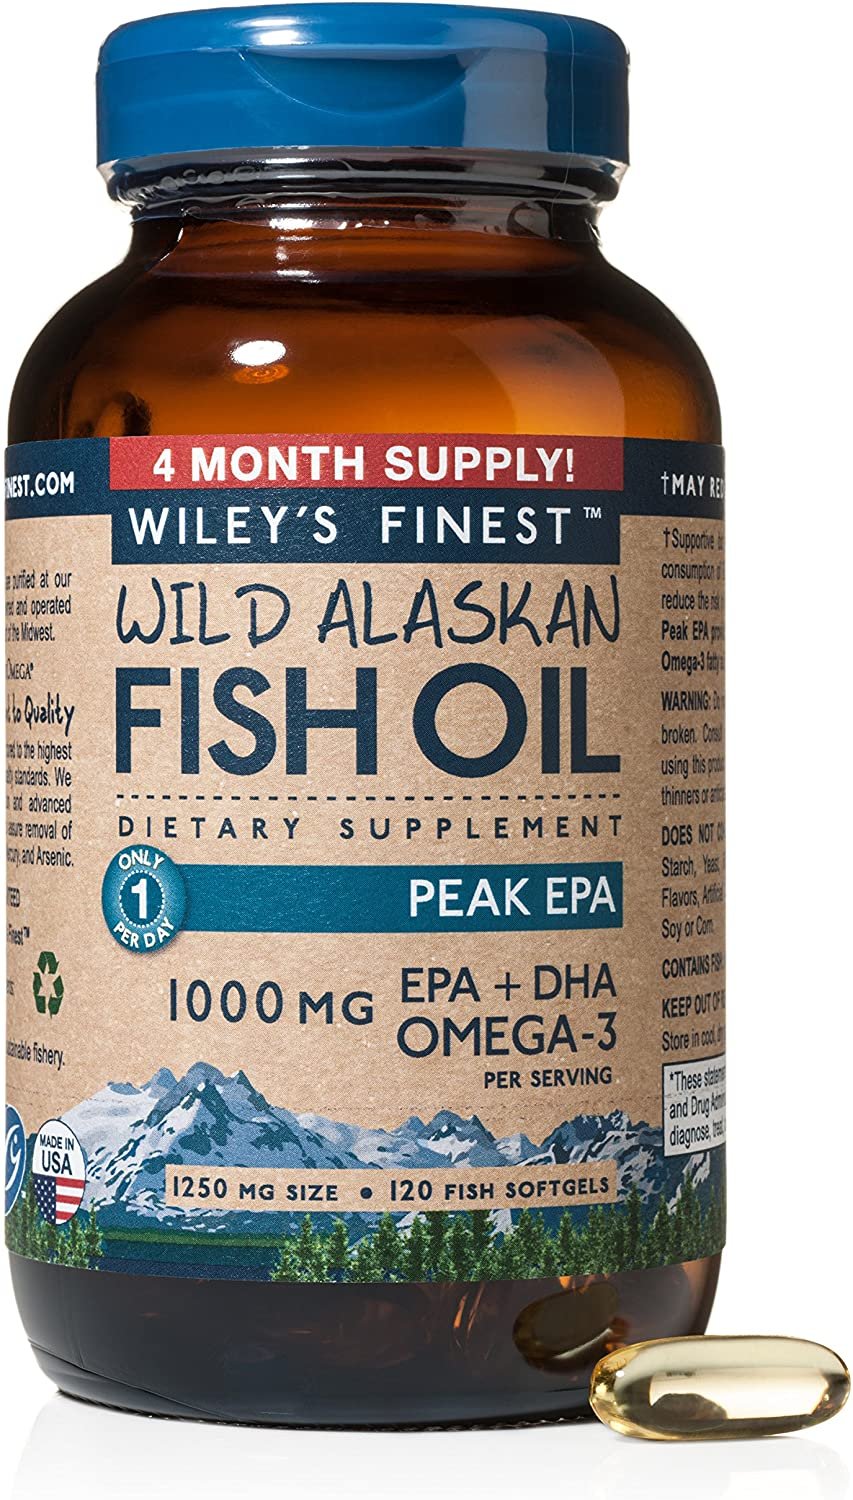 Wiley's Finest Wild Alaskan Fish Oil - 3X Triple Strength Peak EPA DHA, 1000mg Omega-3s, SQF-Certified